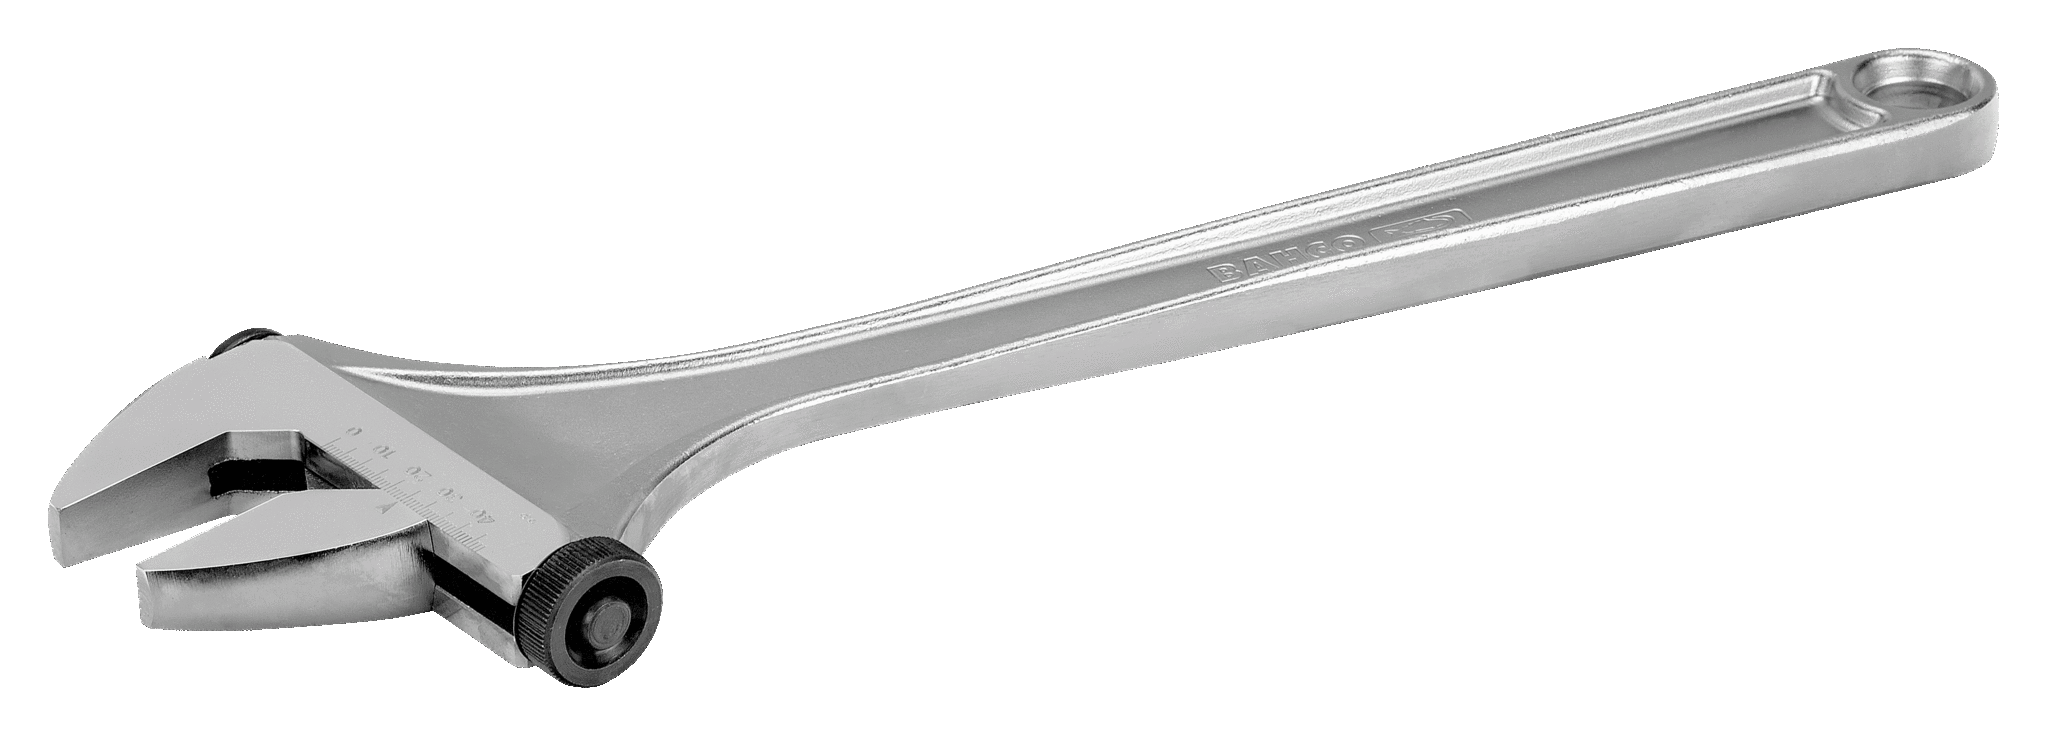 картинка Разводной ключ с регулировкой зева с торца BAHCO 95C от магазина "Элит-инструмент"